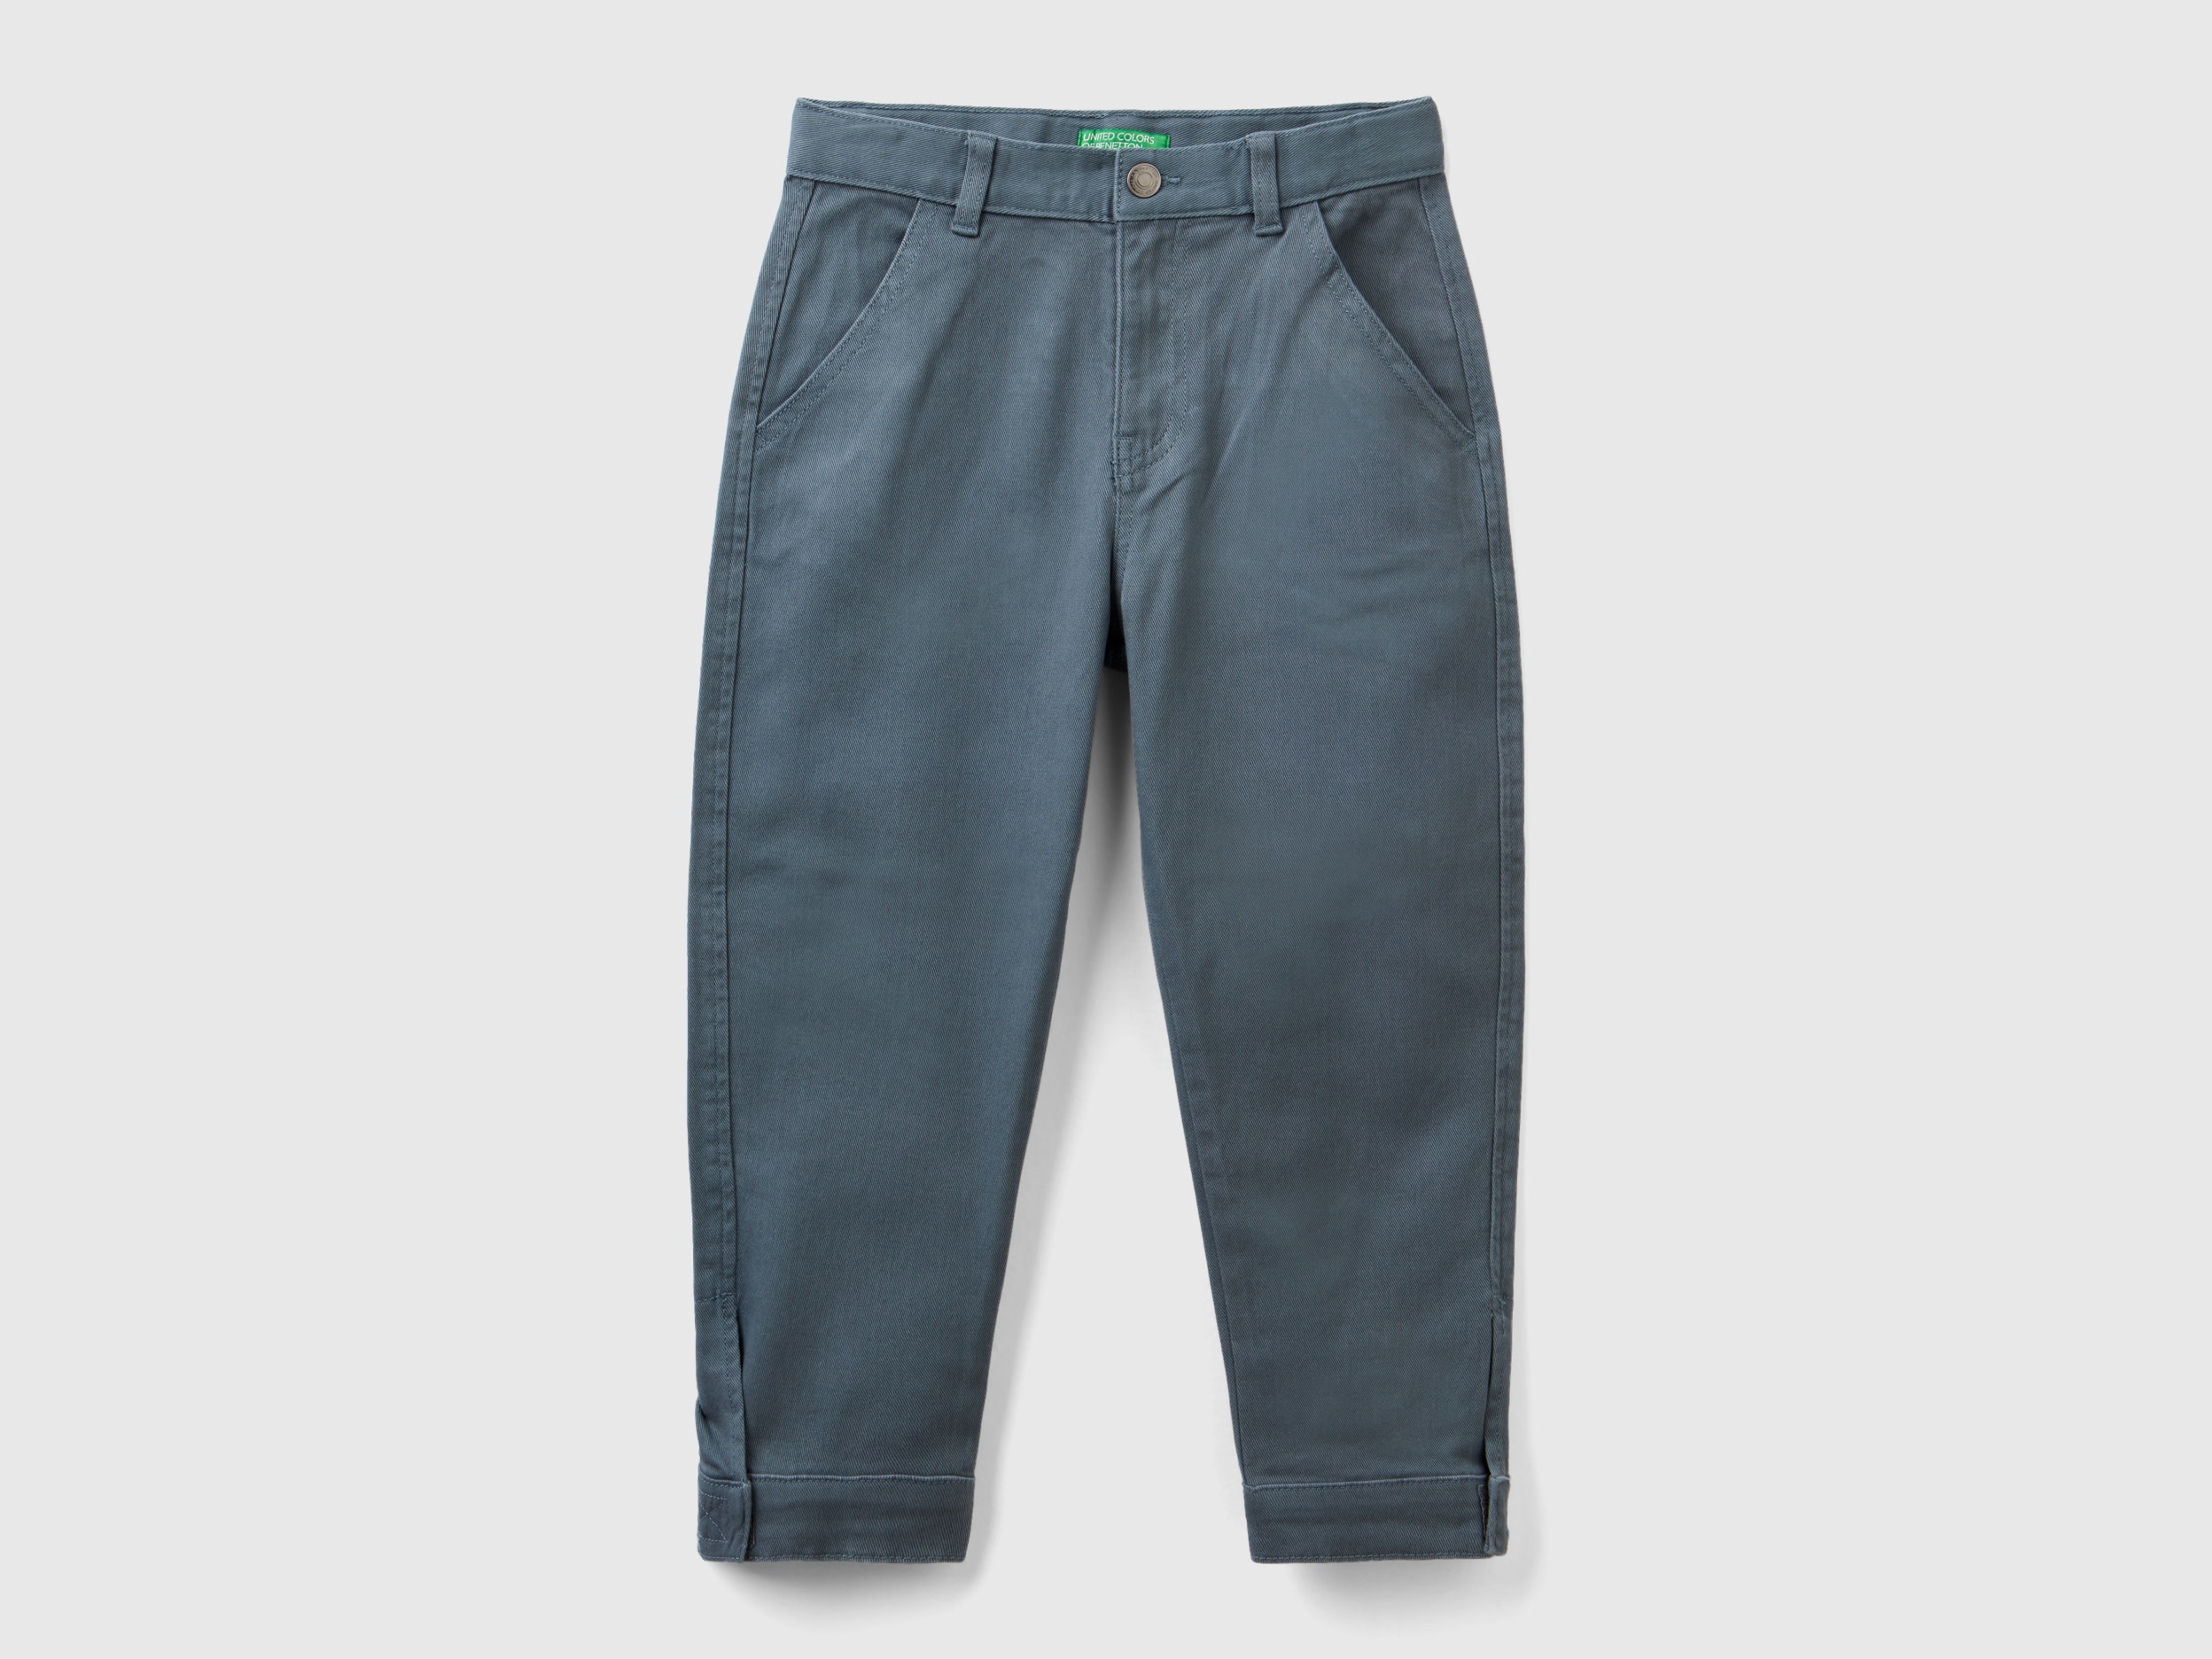 Benetton, Straight Regular Fit Trousers, size 3XL, Dark Gray, Kids